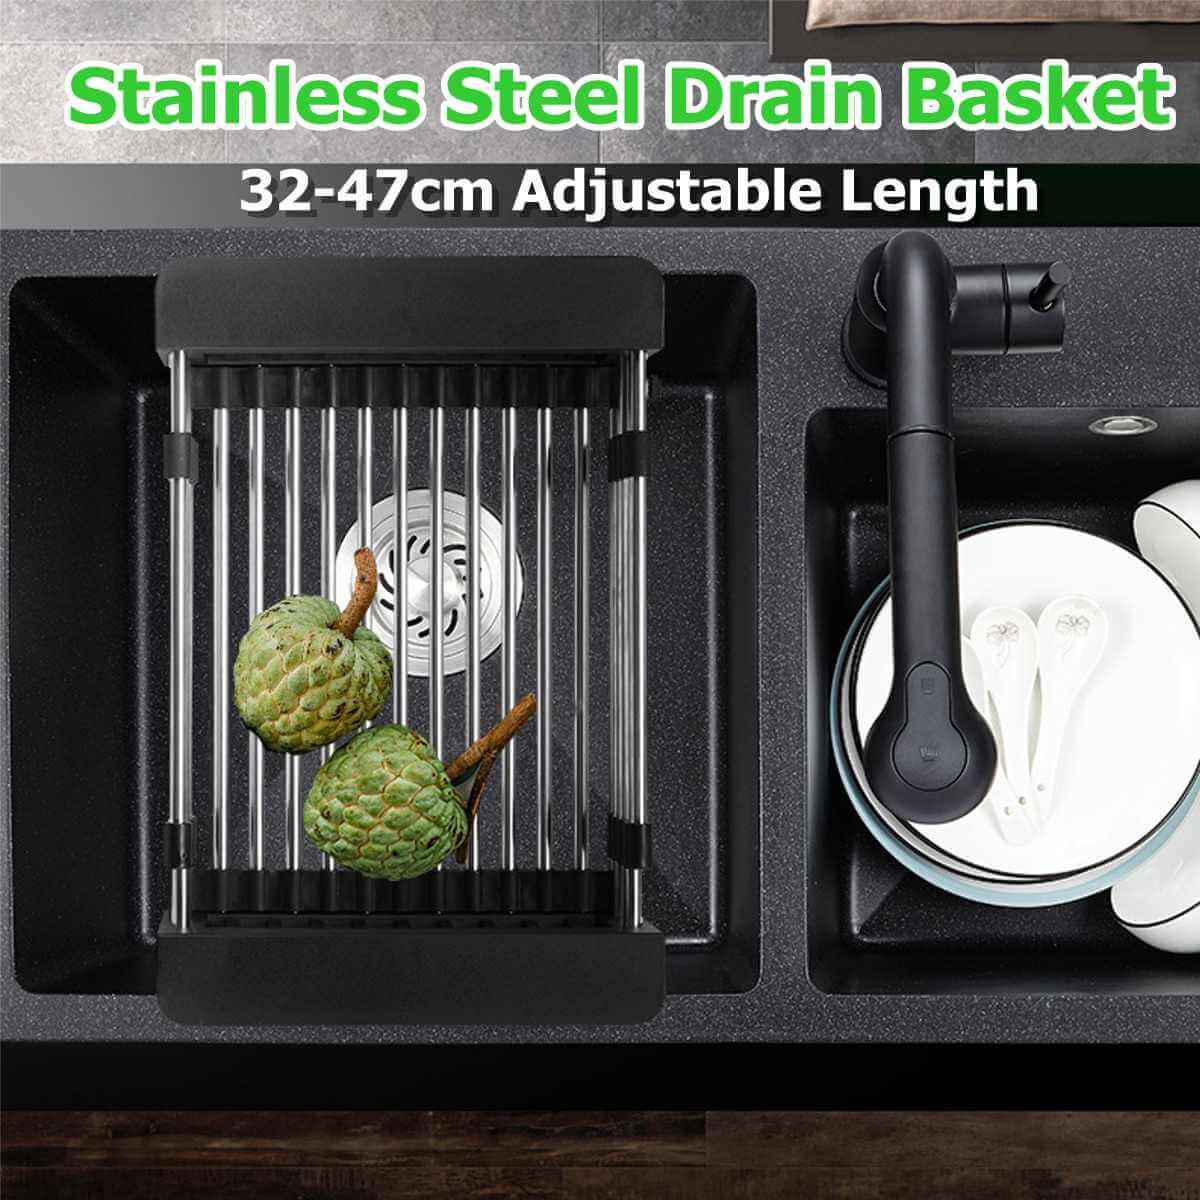 Stainless Steel Adjustable Telescopic Kitchen Over Sink Dish Drying Rack - Venetio